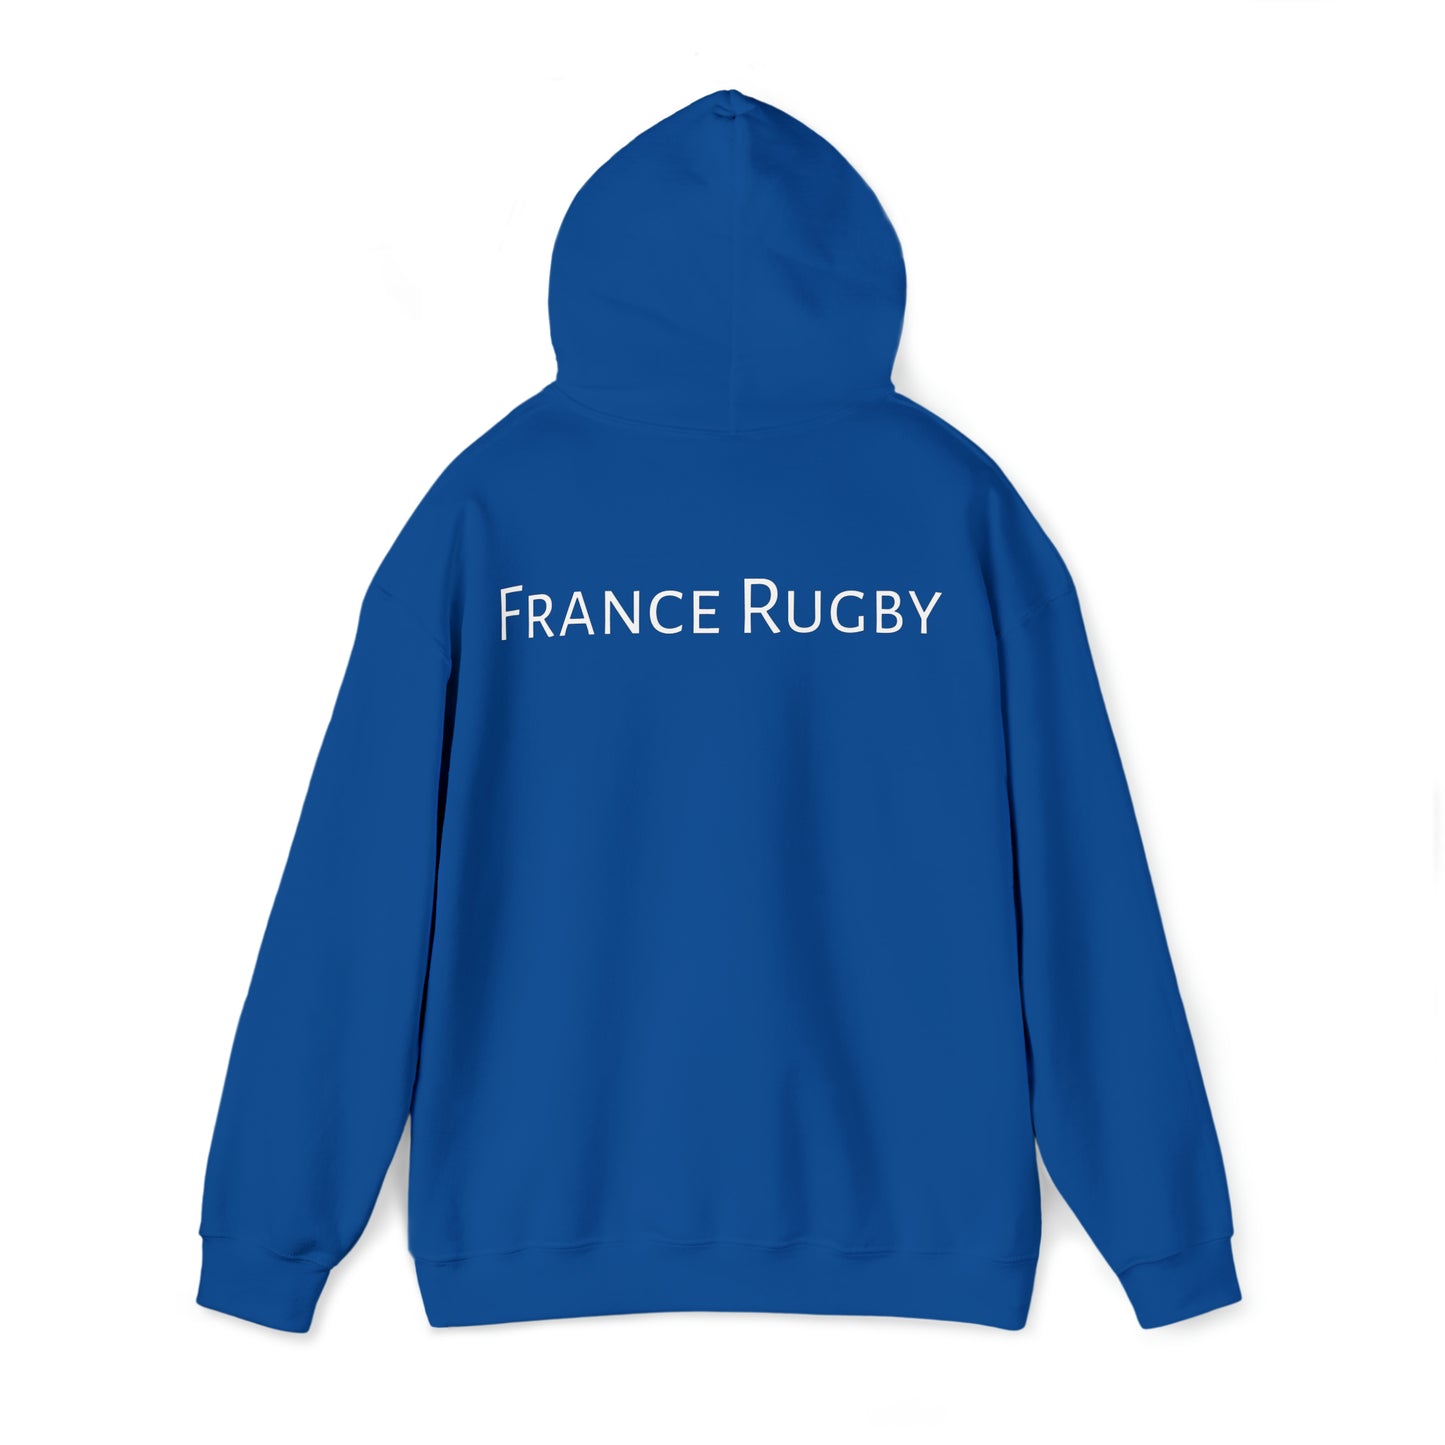 Ready France - dark hoodies